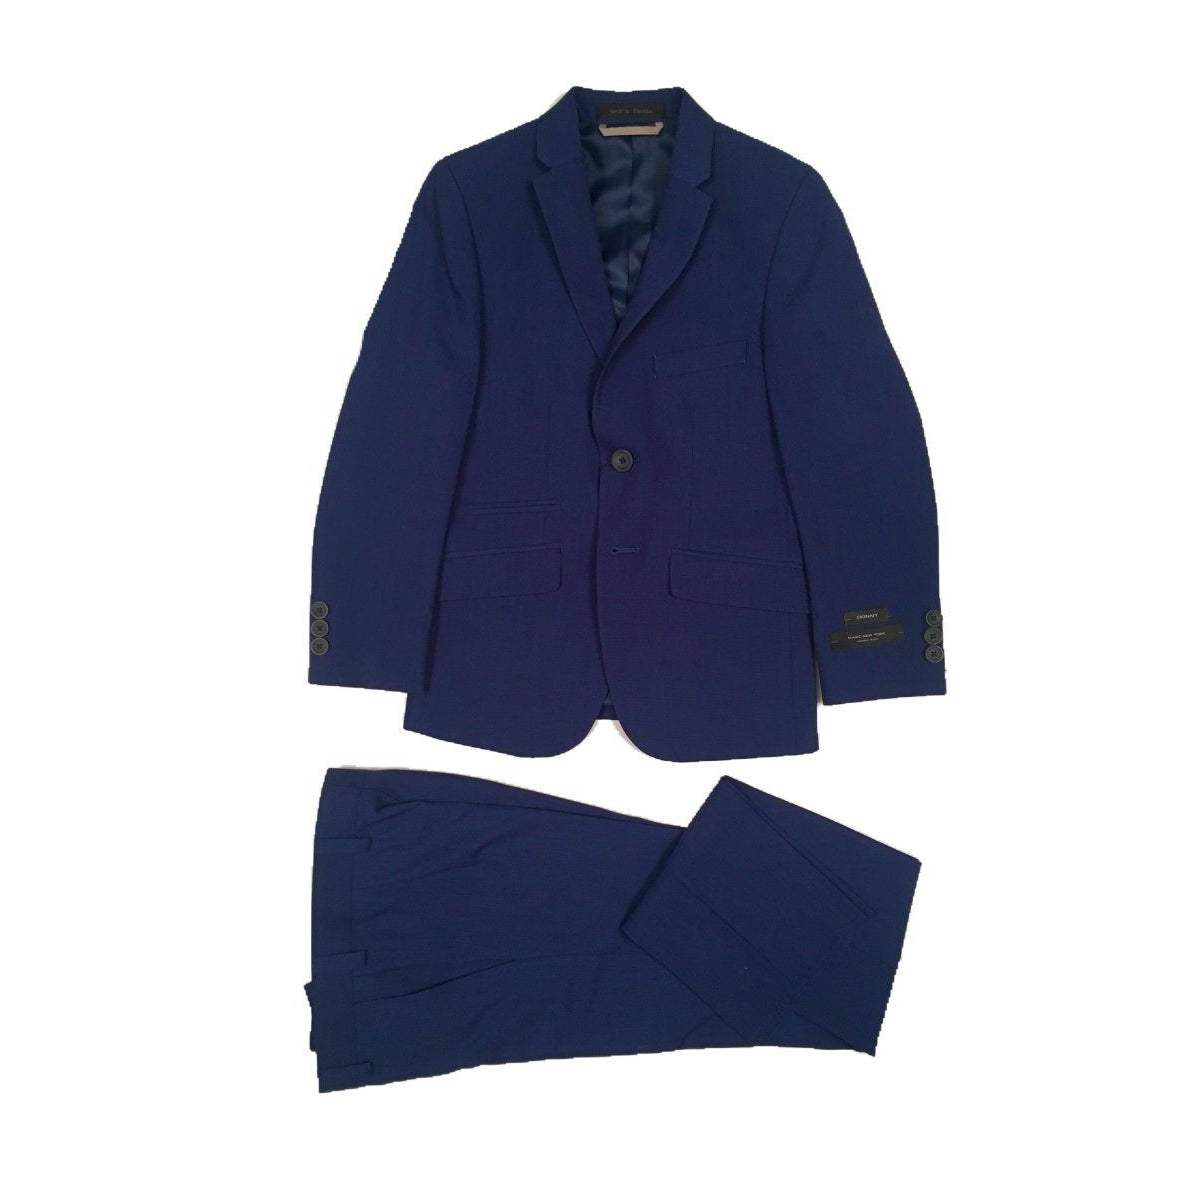 Marc New York Boys Skinny Bright Blue Plaid Suit W0574 Suits (Boys) Marc New York 